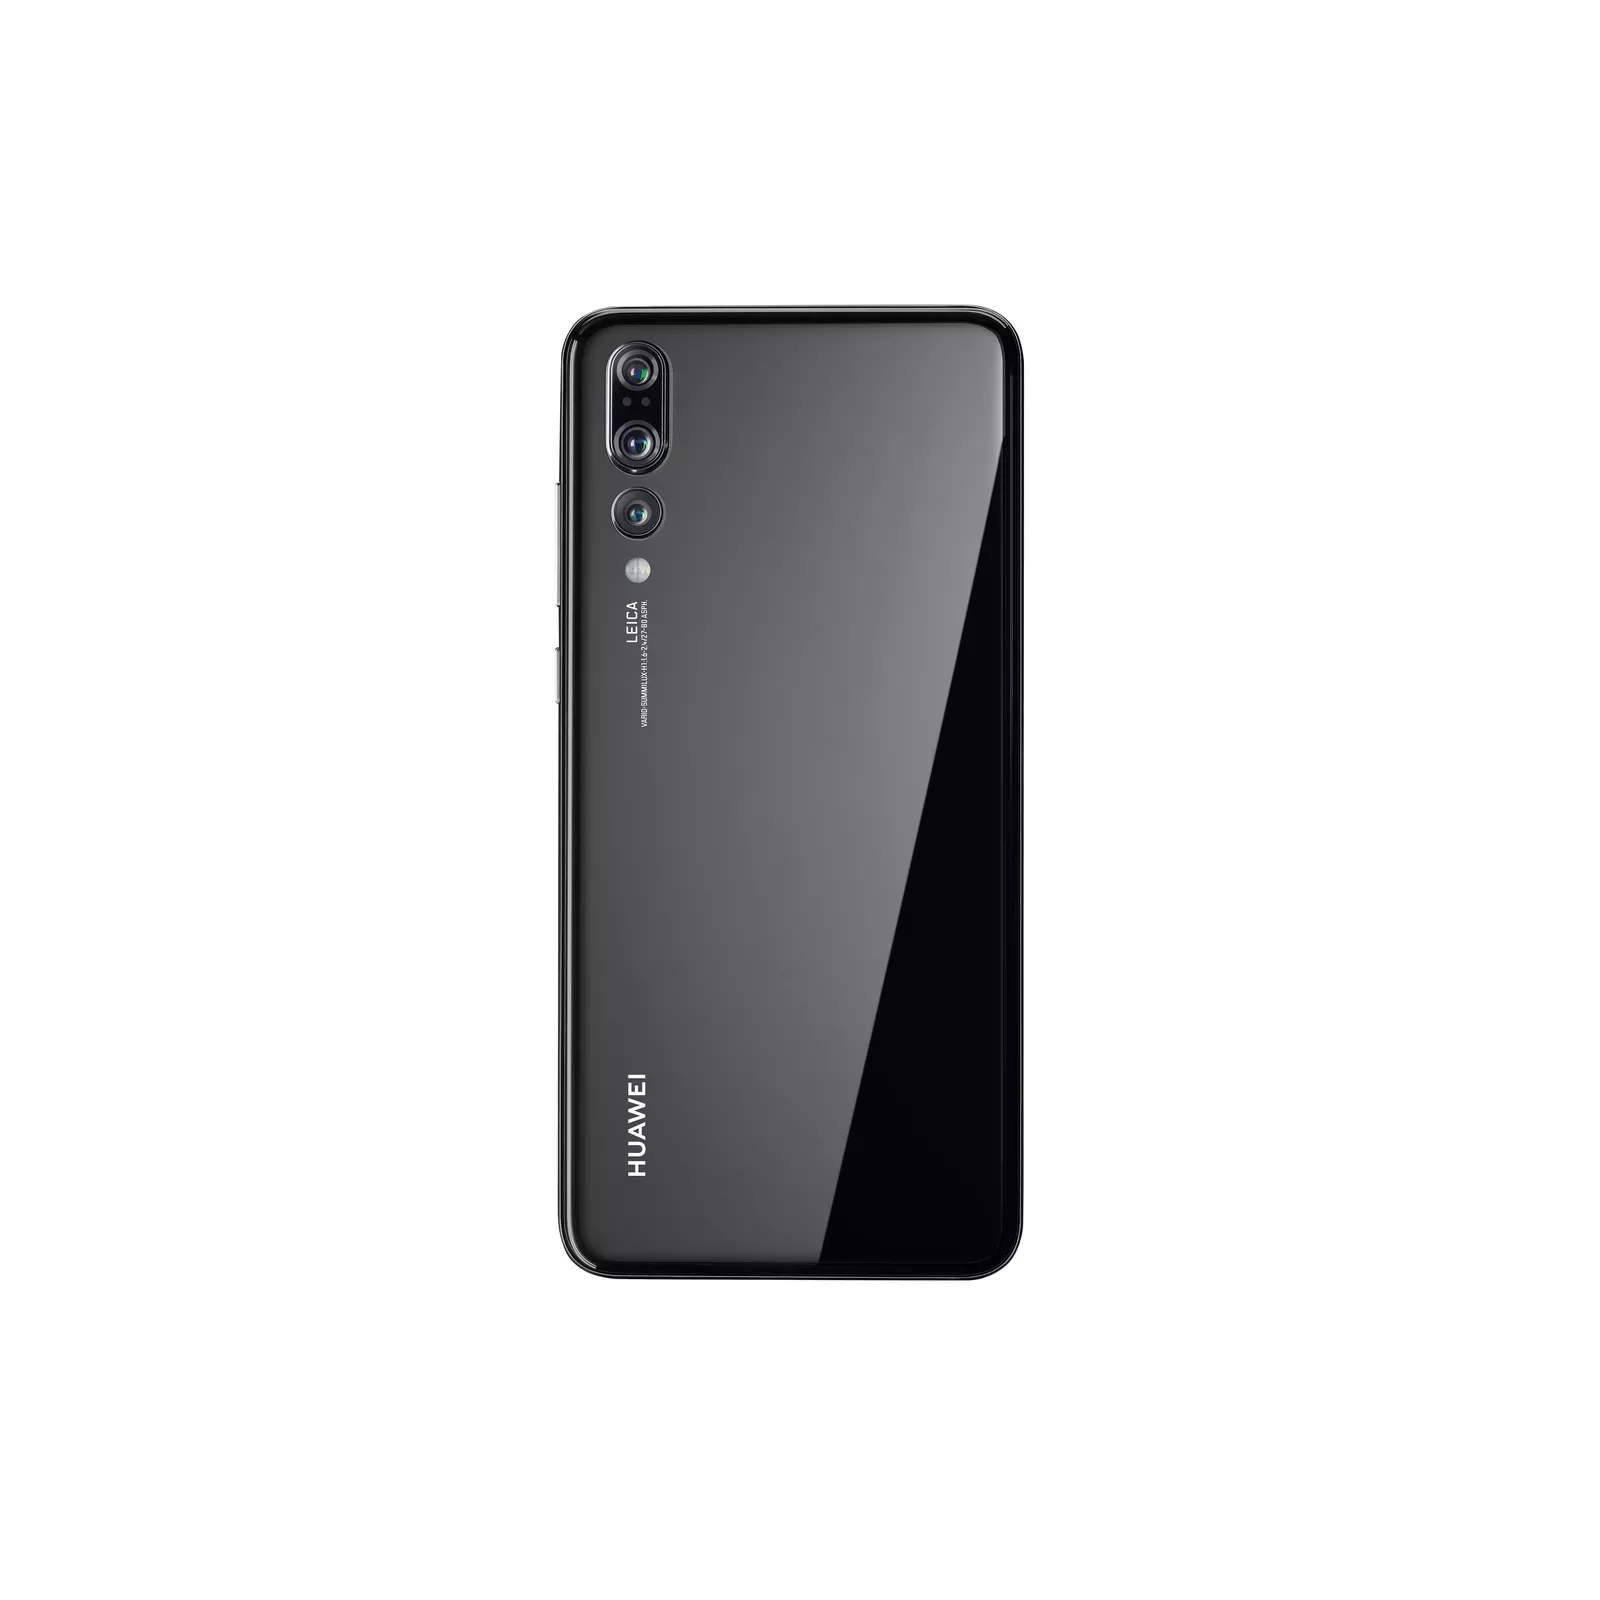 Huawei P20 Pro Dual SIM black 128GB 6GB 6.1 40MP Kirin970 Phone